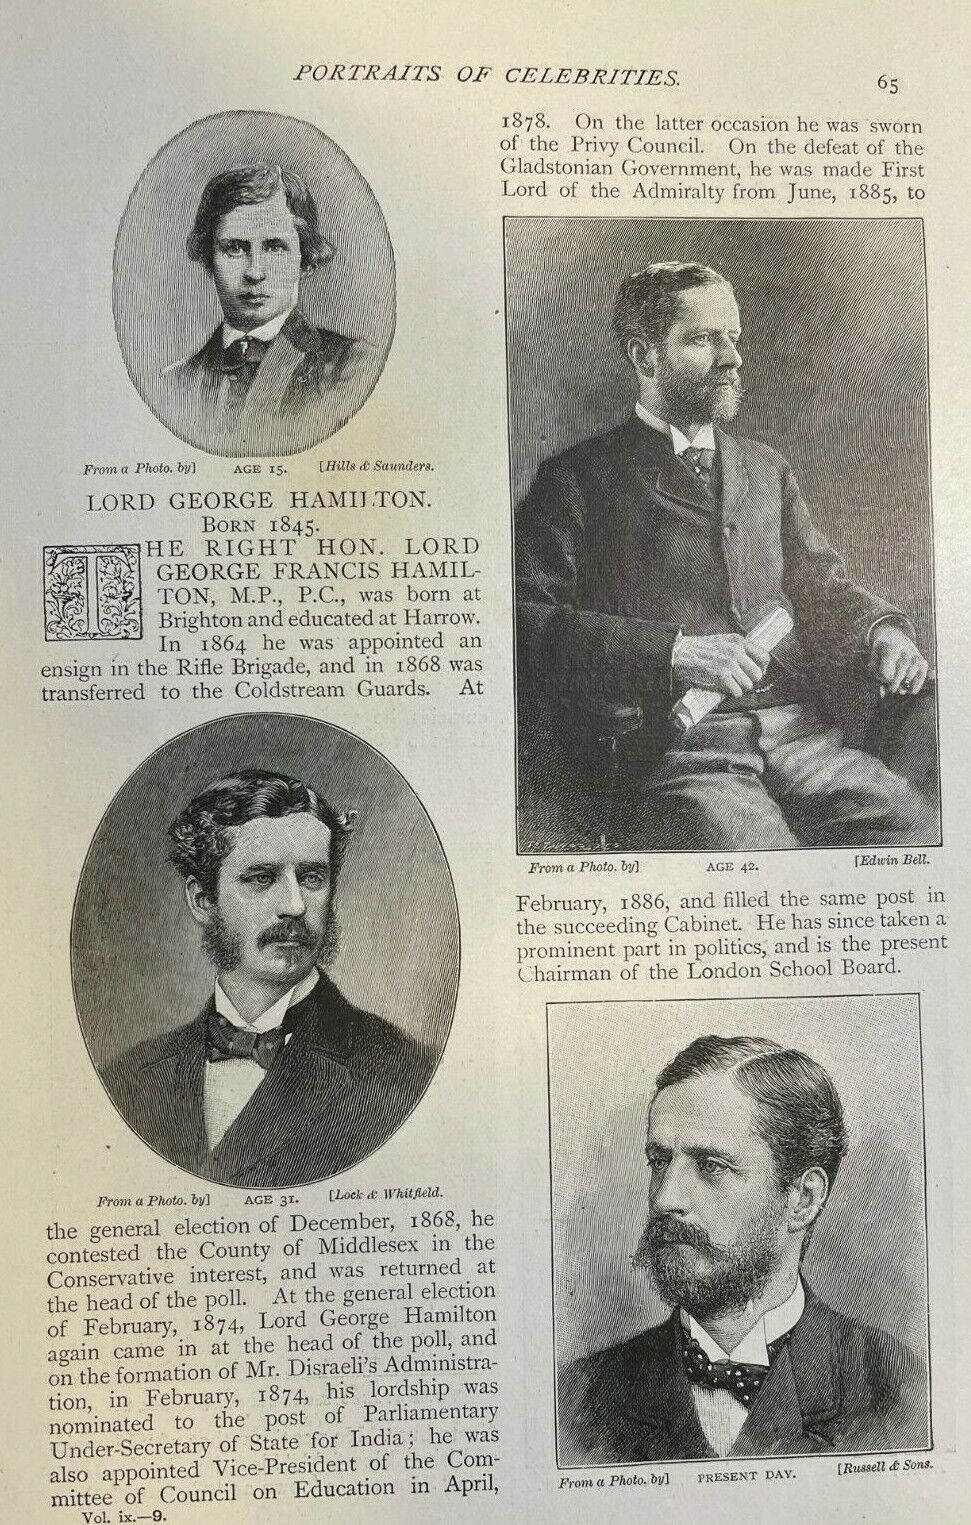 1895 Lord George Francis Hamilton